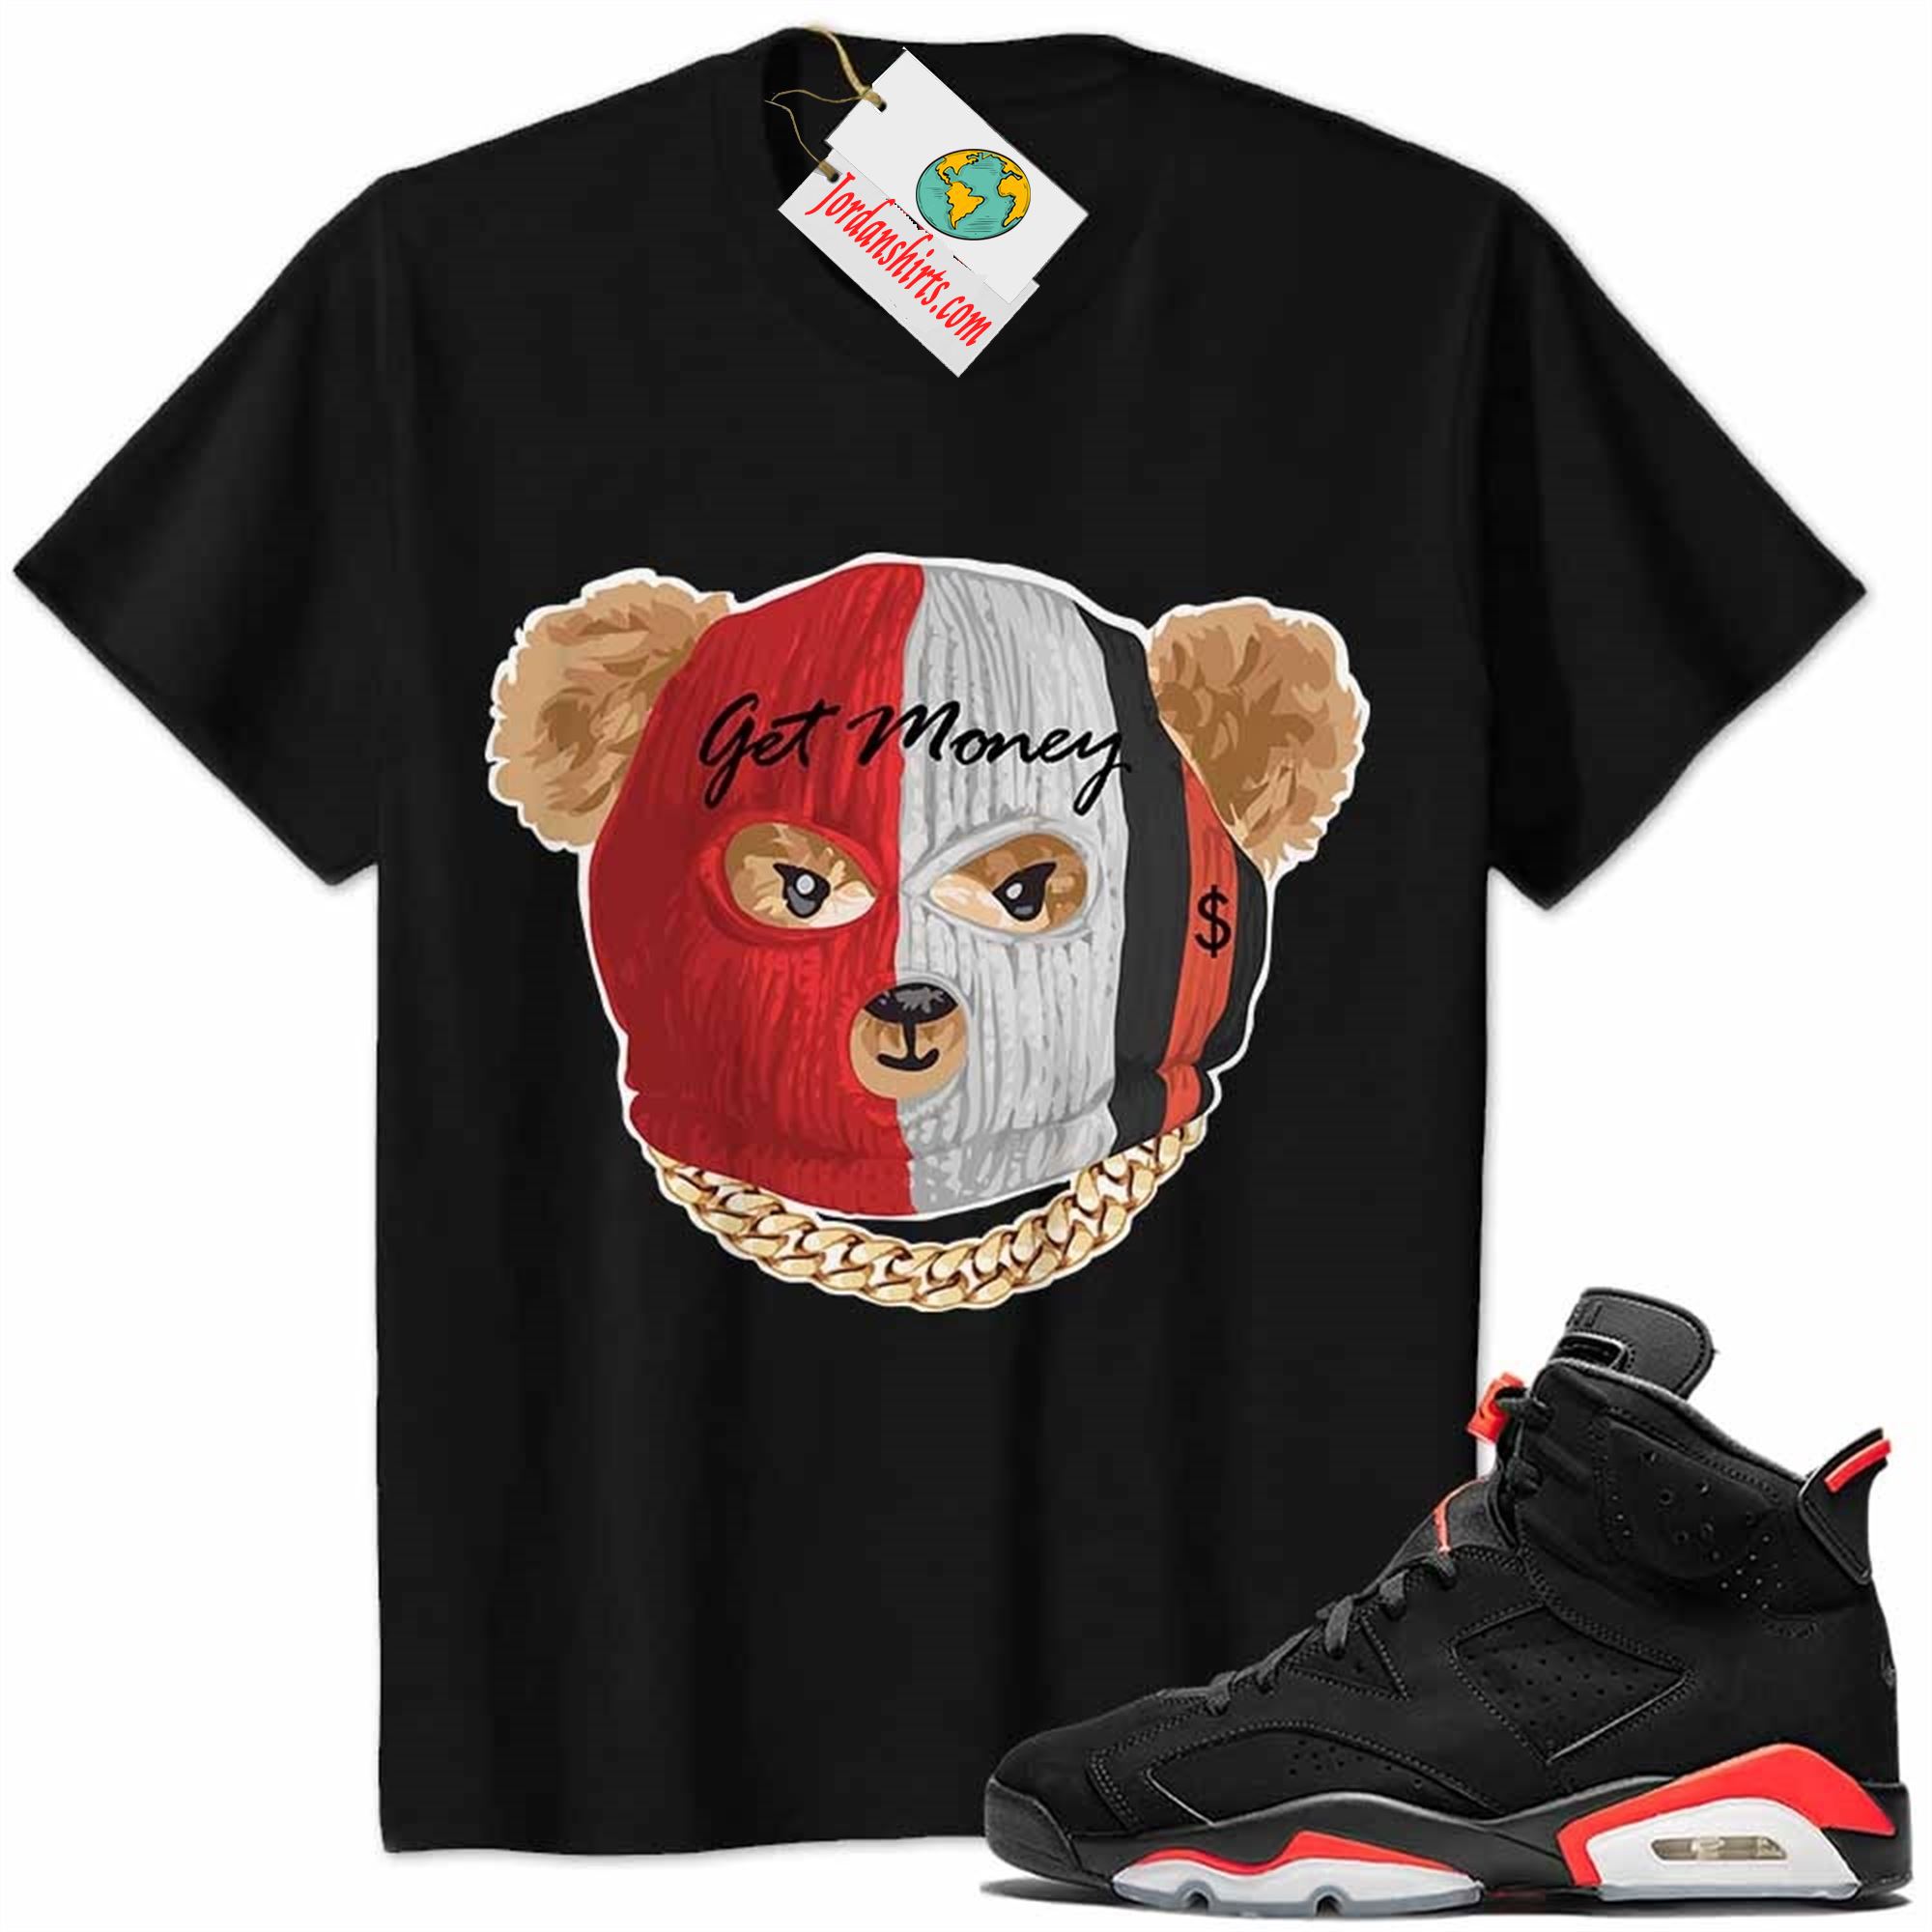 Jordan 6 Shirt, Robber Teddy Get Money Ski Mask Black Air Jordan 6 Infrared 6s Size Up To 5xl